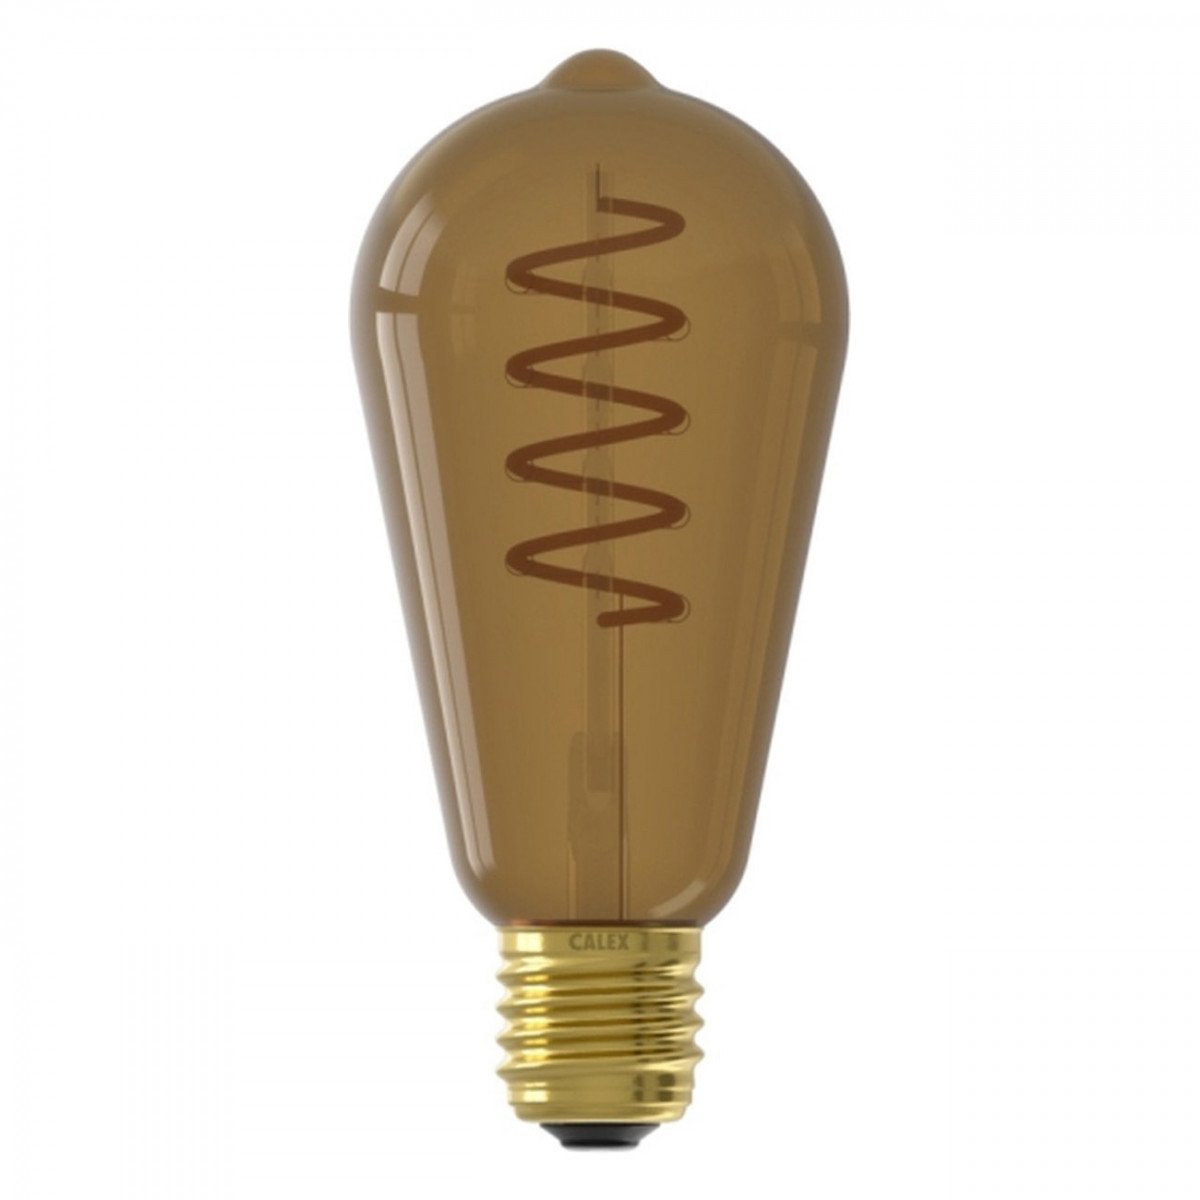 Elegantes Calex LED-Leuchtmittel 3,5 Watt E27-Fassung moderne Ambientebeleuchtung